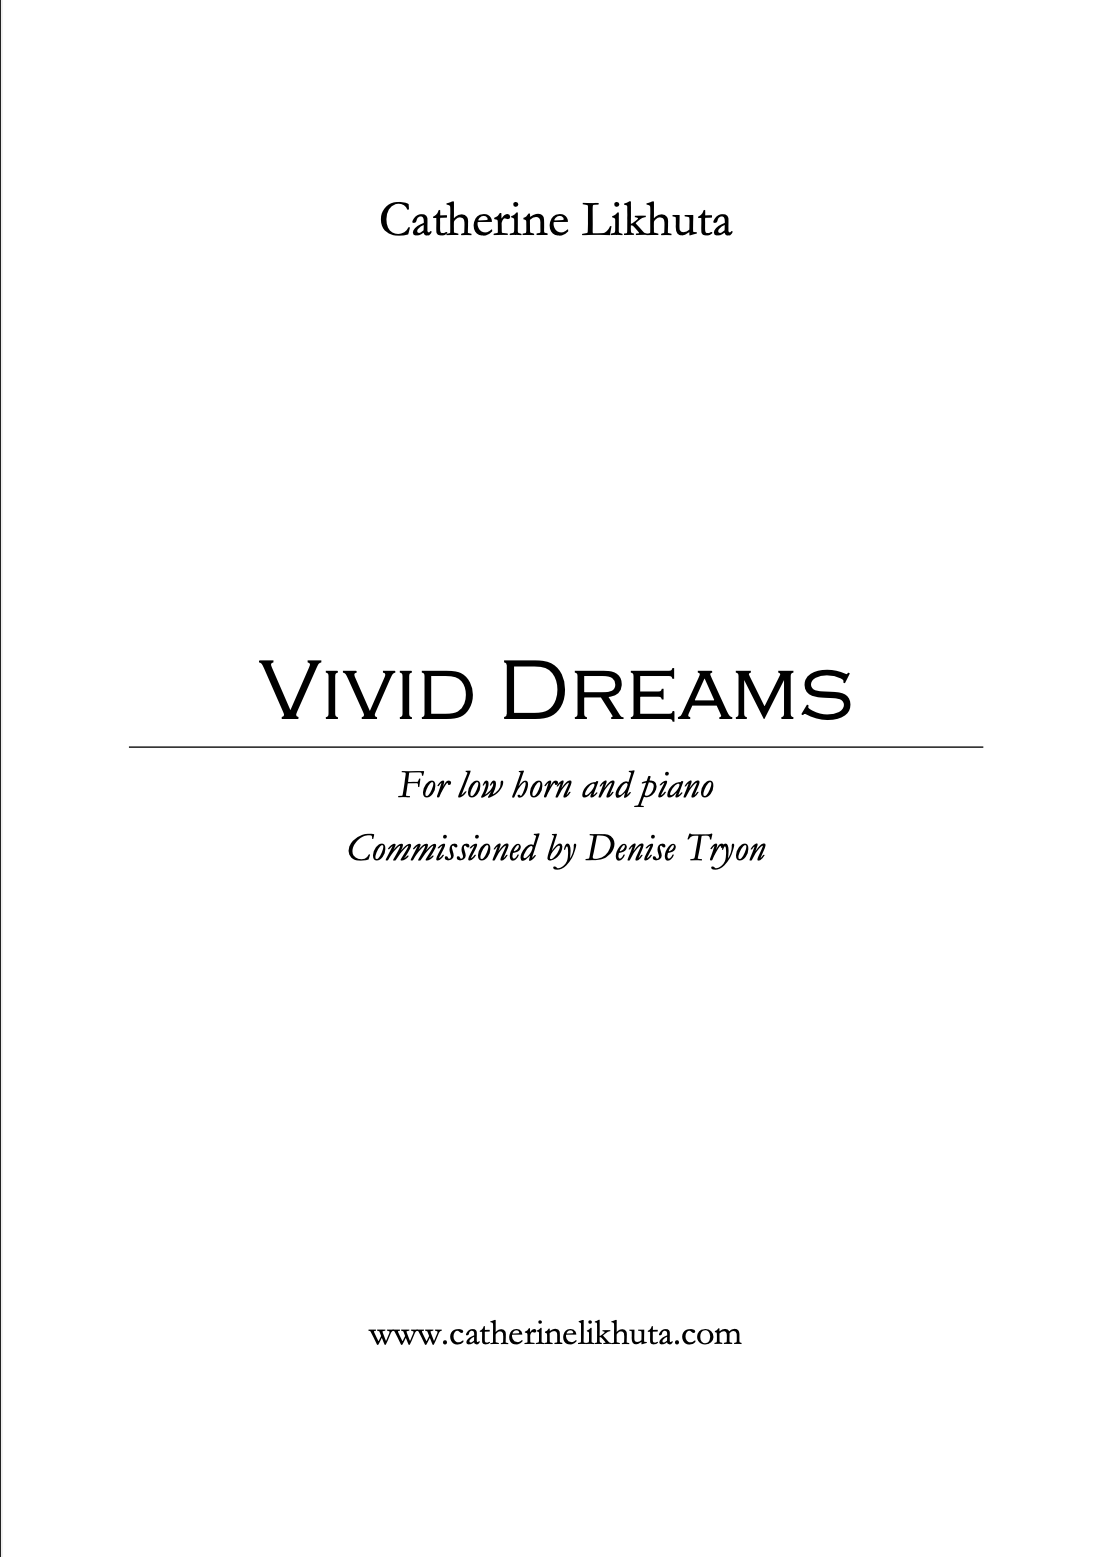 Vivid Dreams (Piano Reduction) by Catherine Likhuta